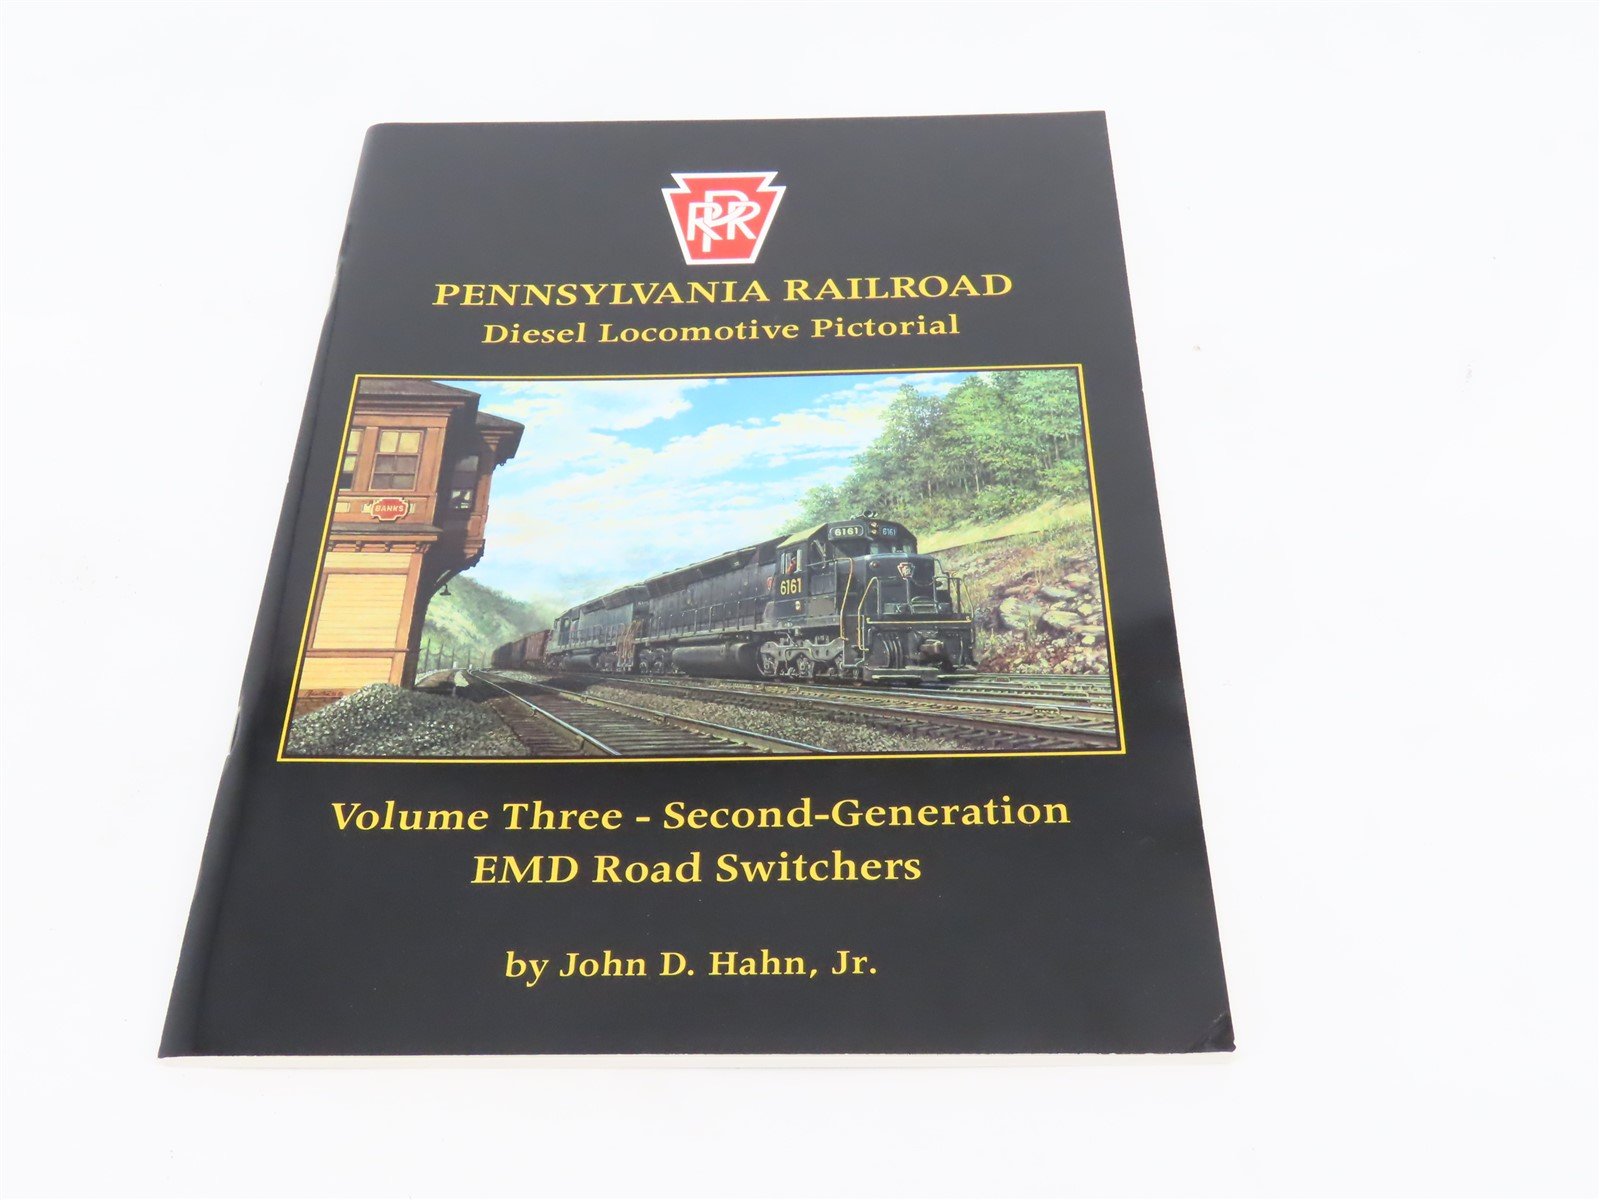 Pennsylvania Railroad Diesel Locomotive Pictorial Vol 3 by John D Hahn, Jr ©1996